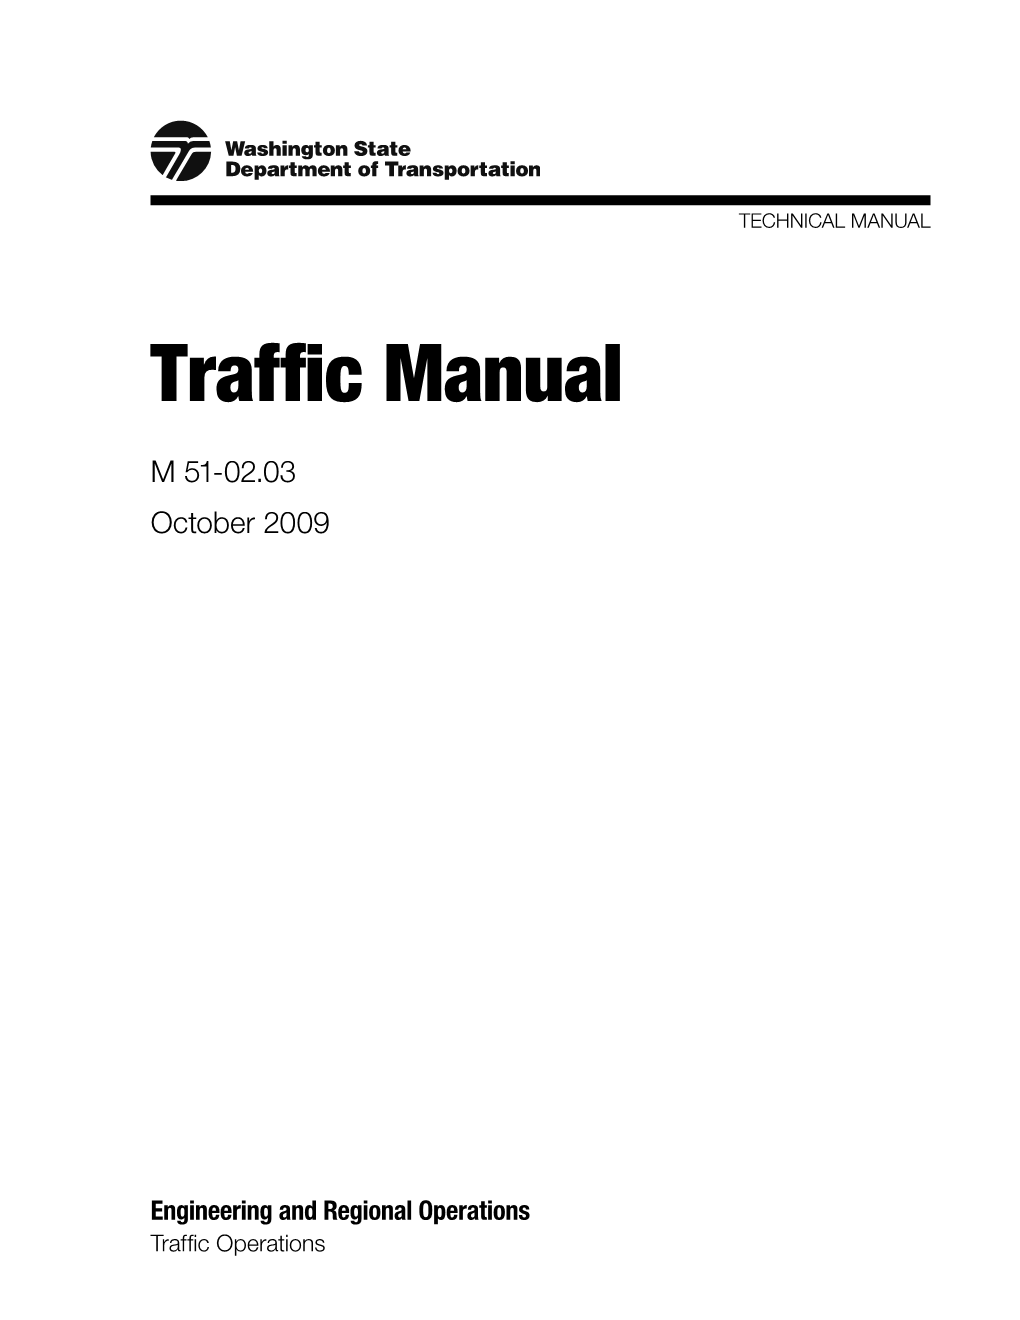 Traffic Manual M 51-02.03 October 2009